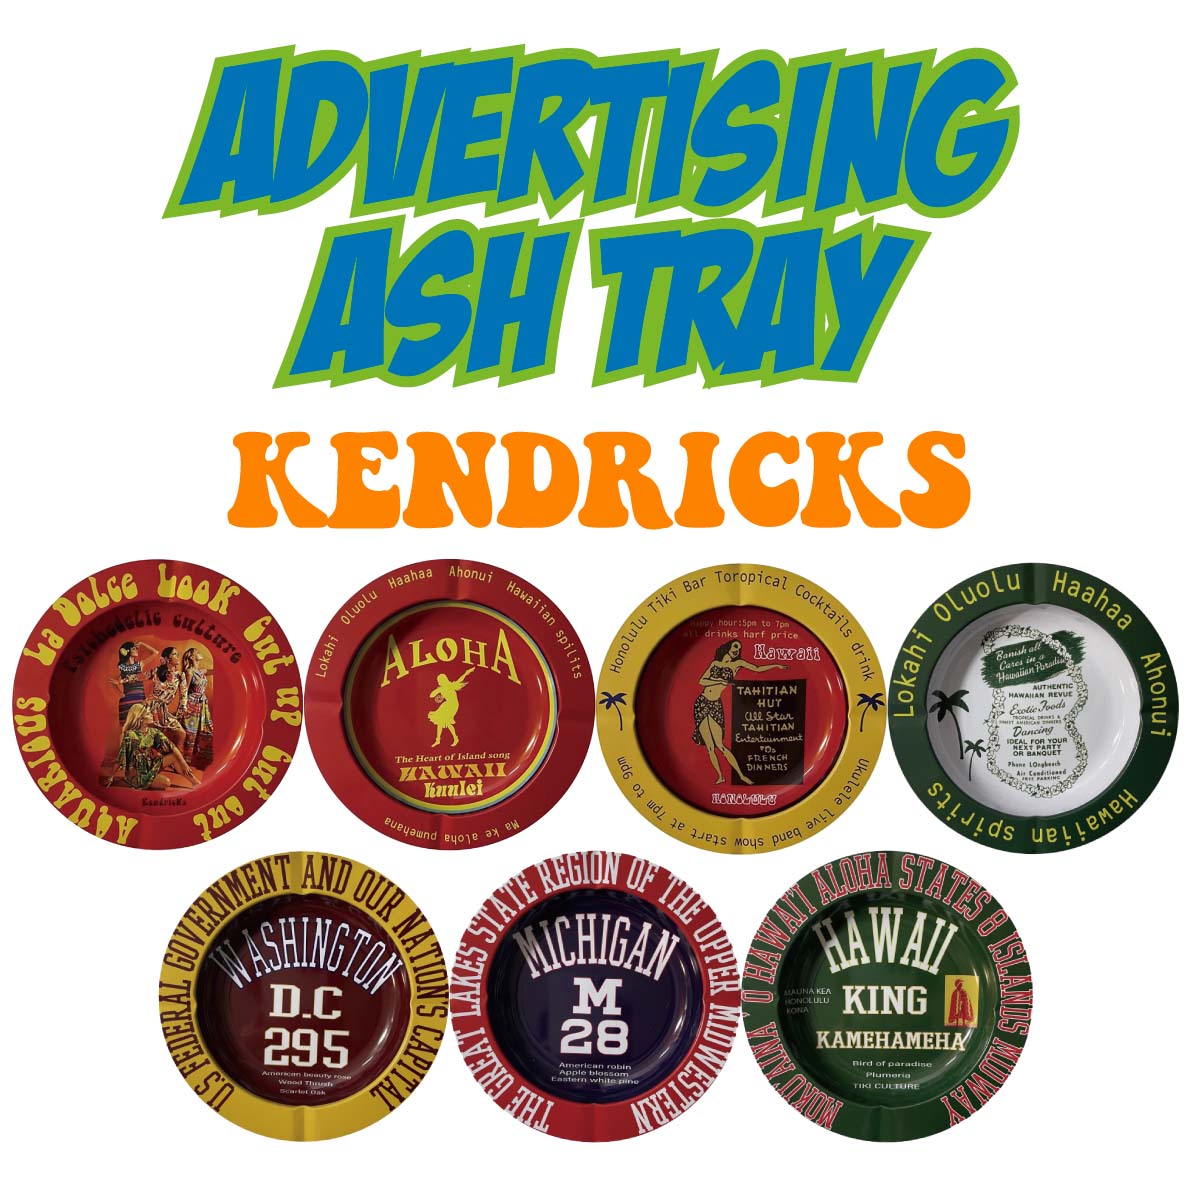 【70's レトロヴィンテージ】【カラフルポップアート】Advertising Ash Tray 灰皿 KENDRICKS